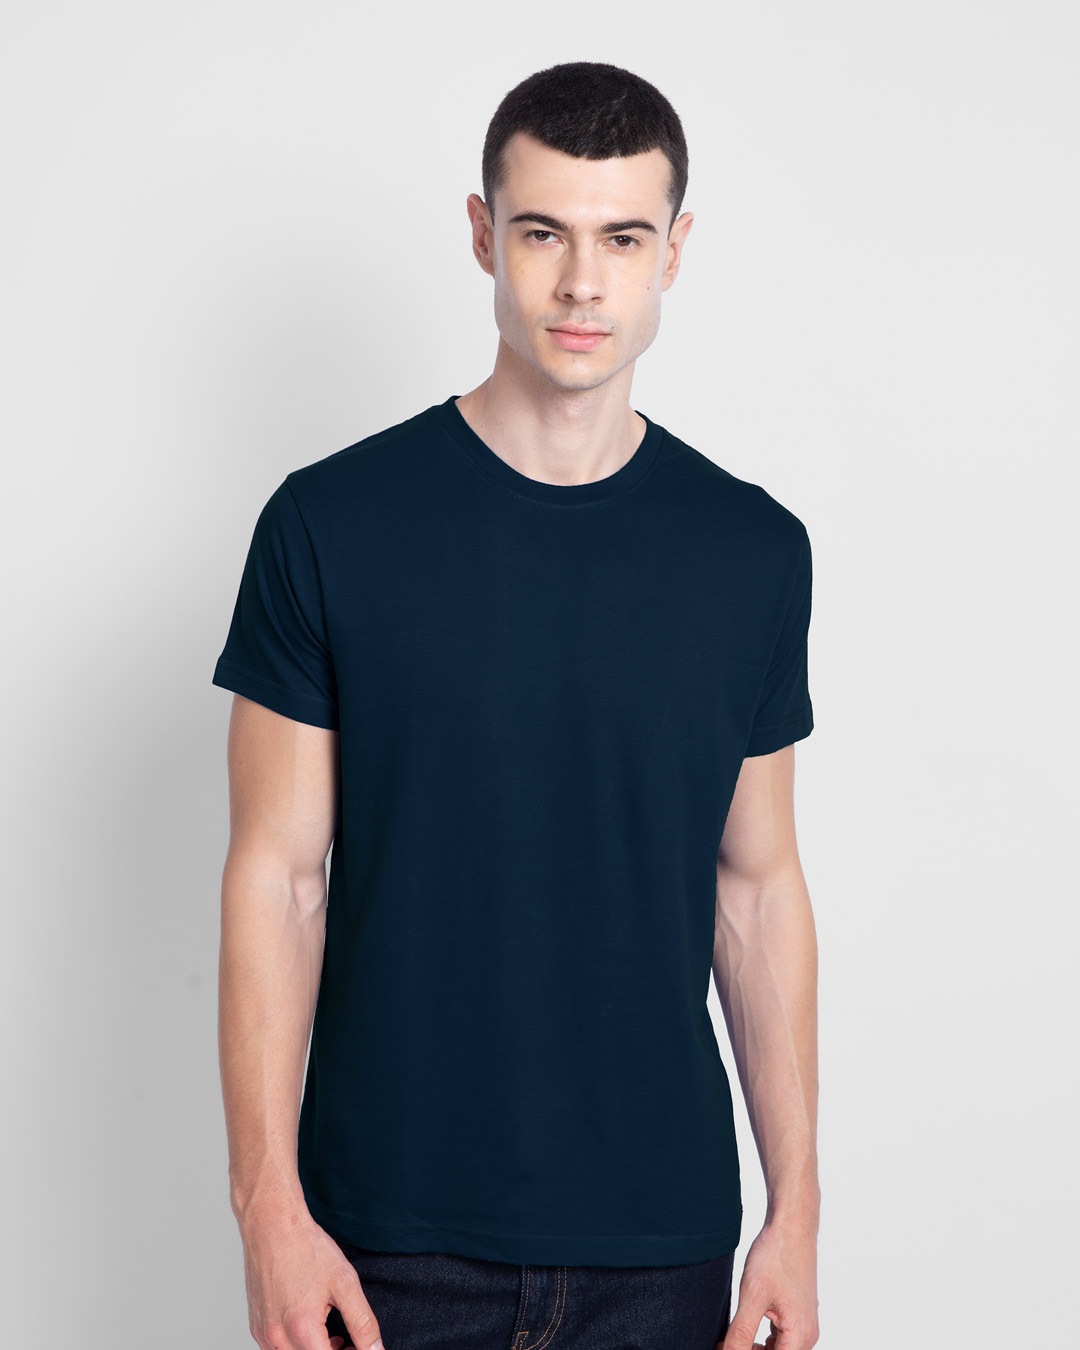 Navy Blue Plain T Shirts For Men Online At Bewakoof Com